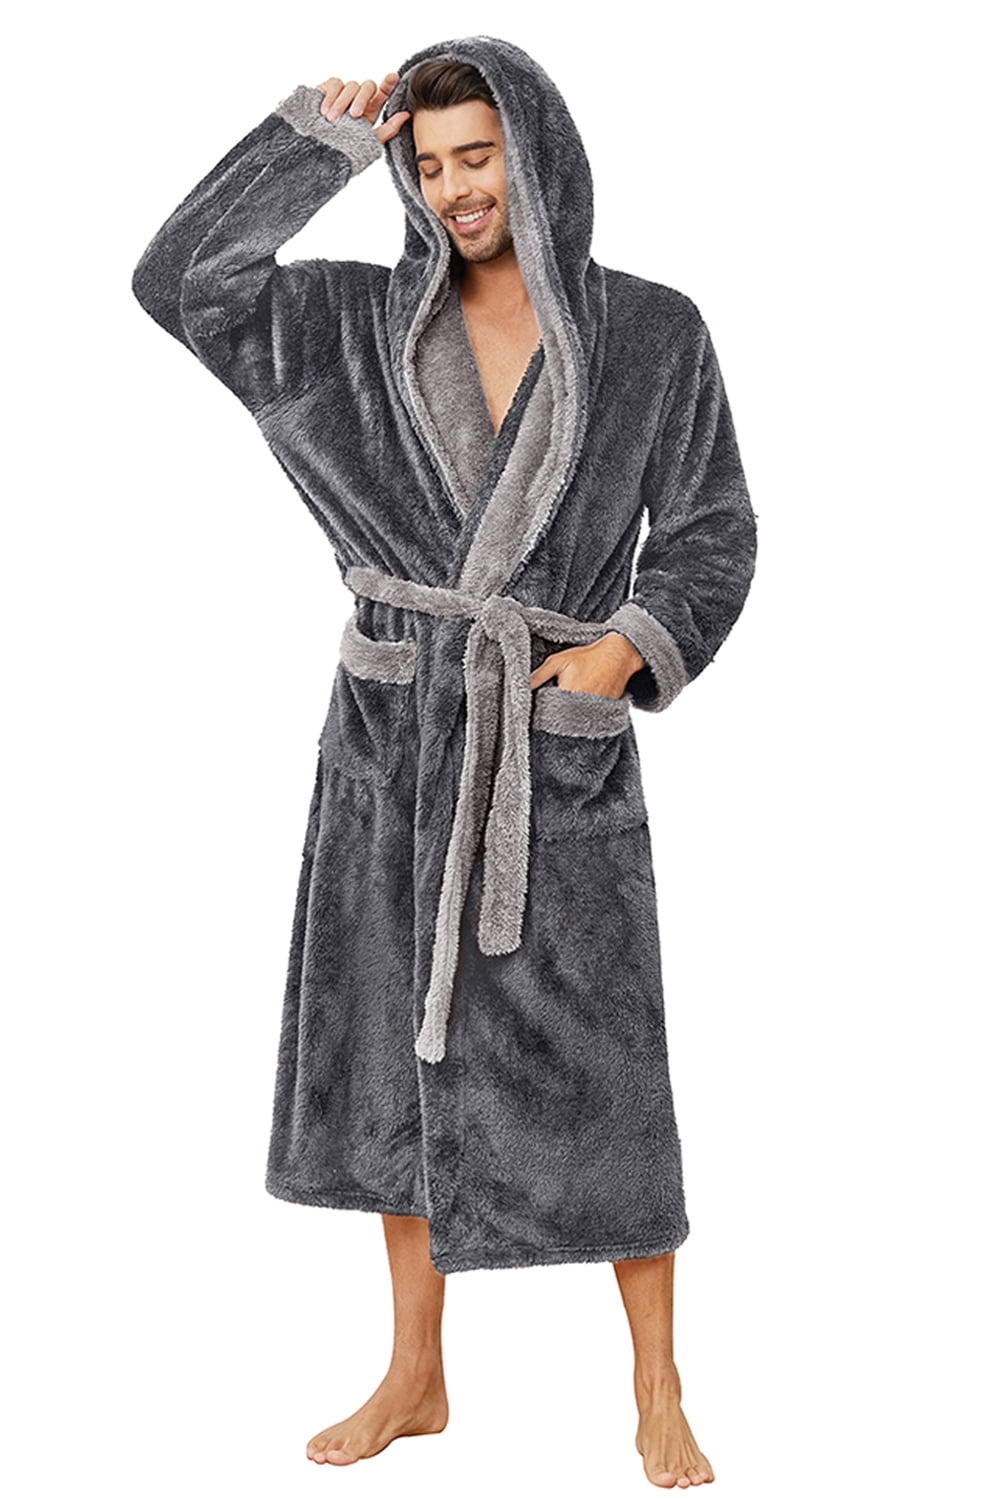 VULCANODON Mens Hooded Robe, Big and Tall Full Length Plush Robe for ...